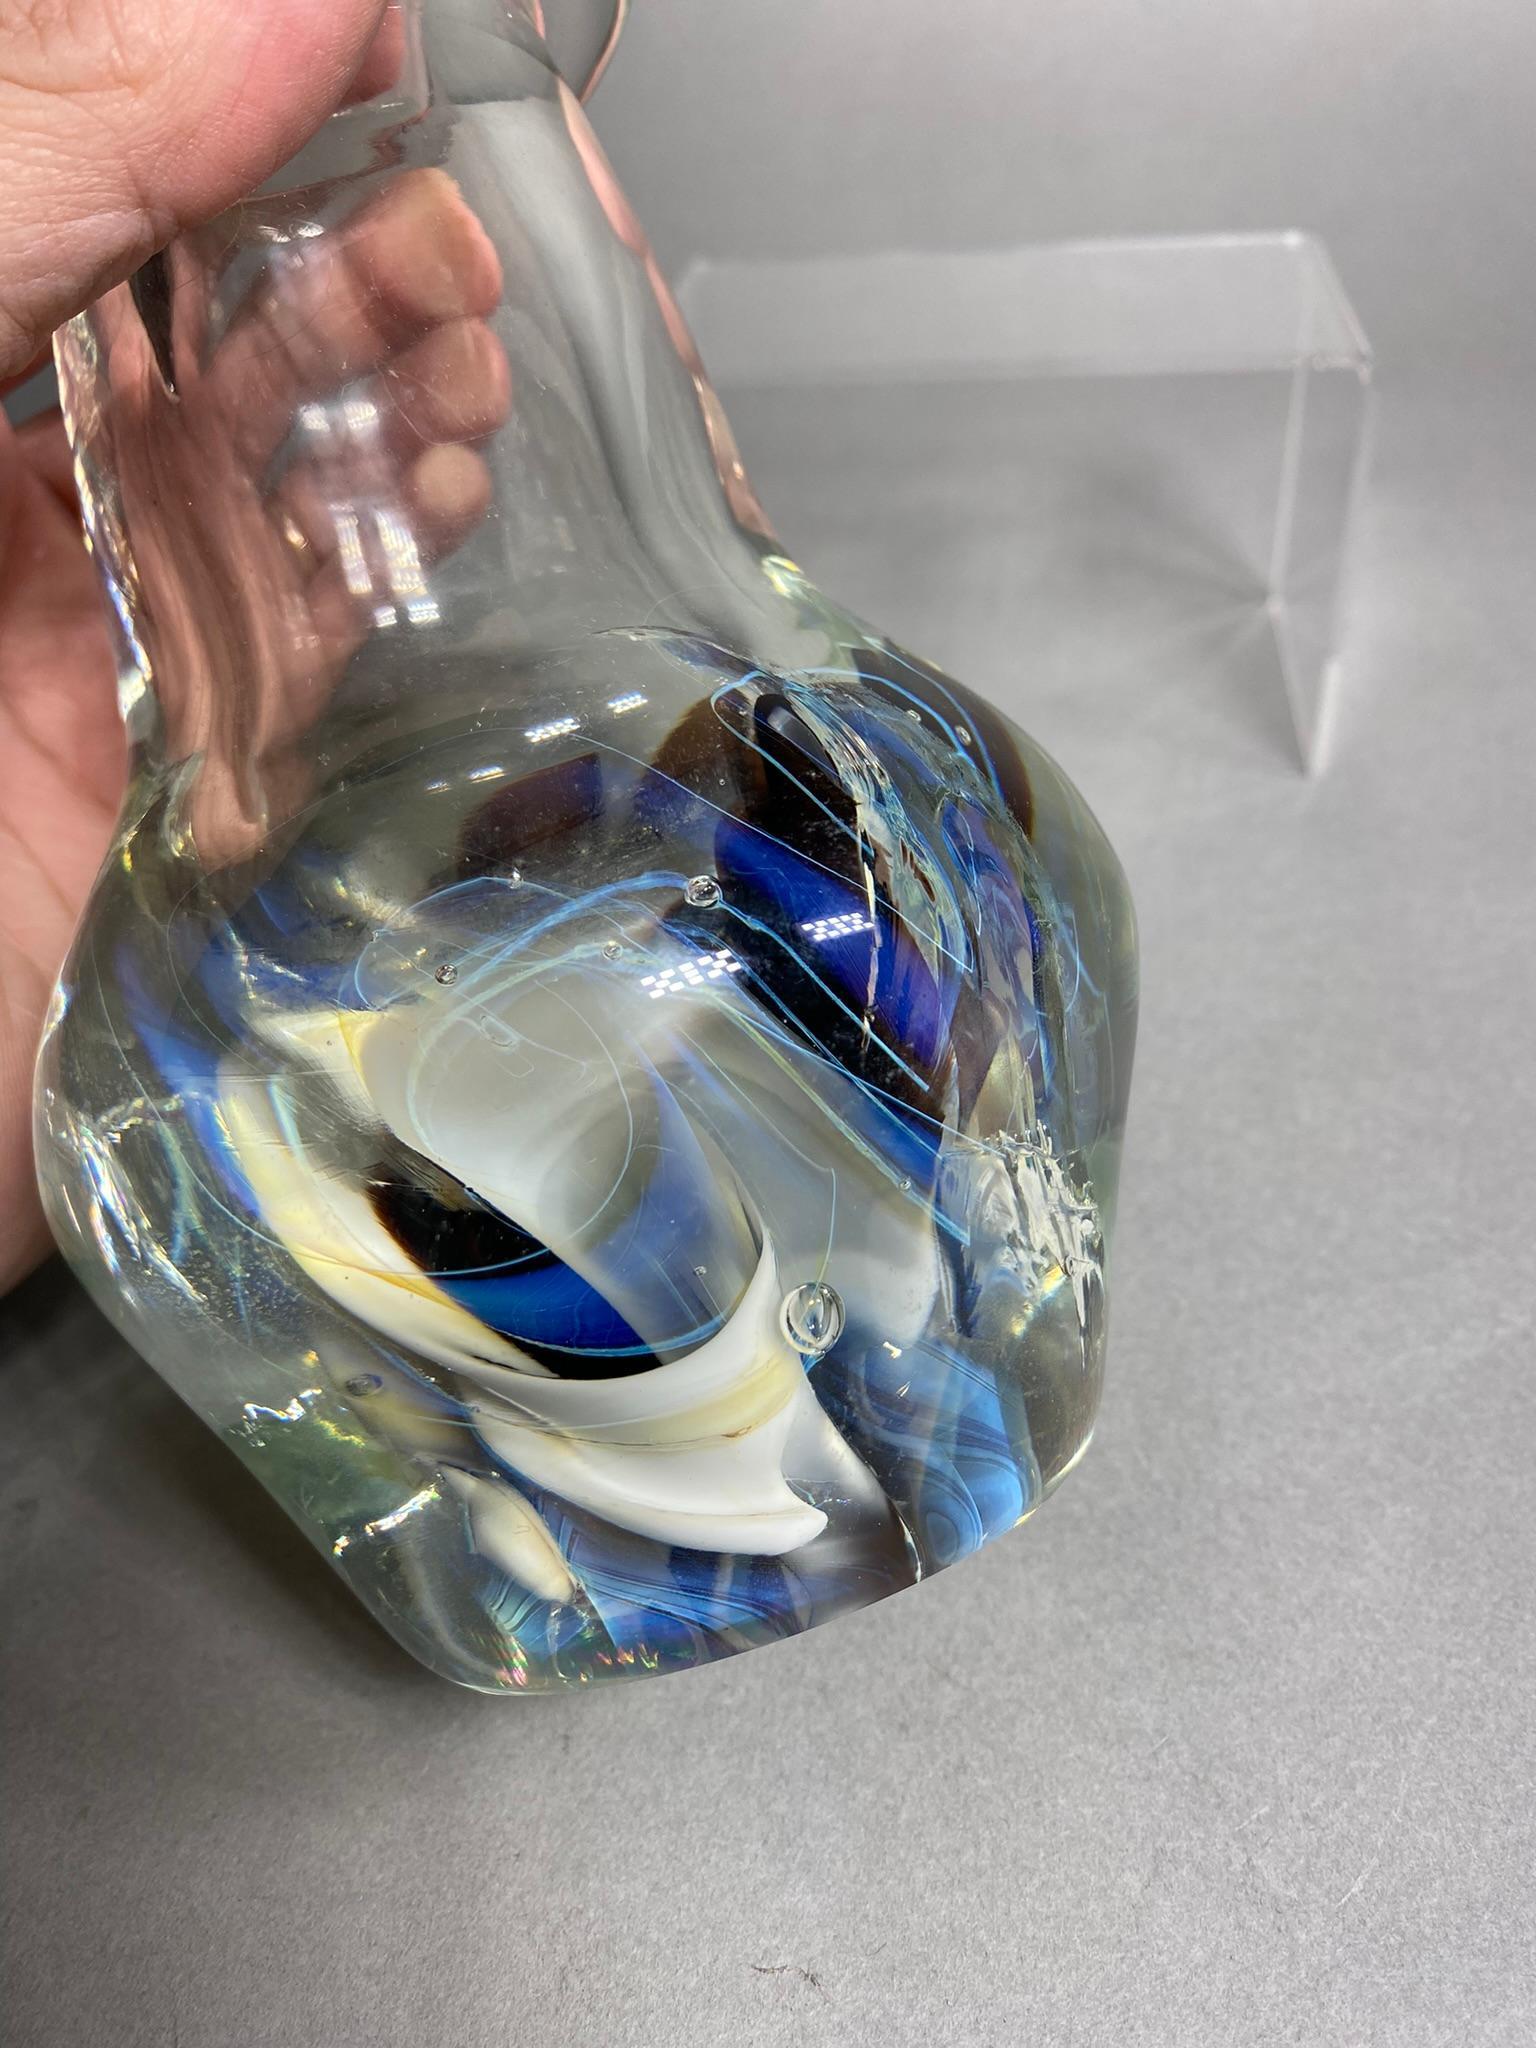 Vintage Art Glass Vase Signed Wright 1980